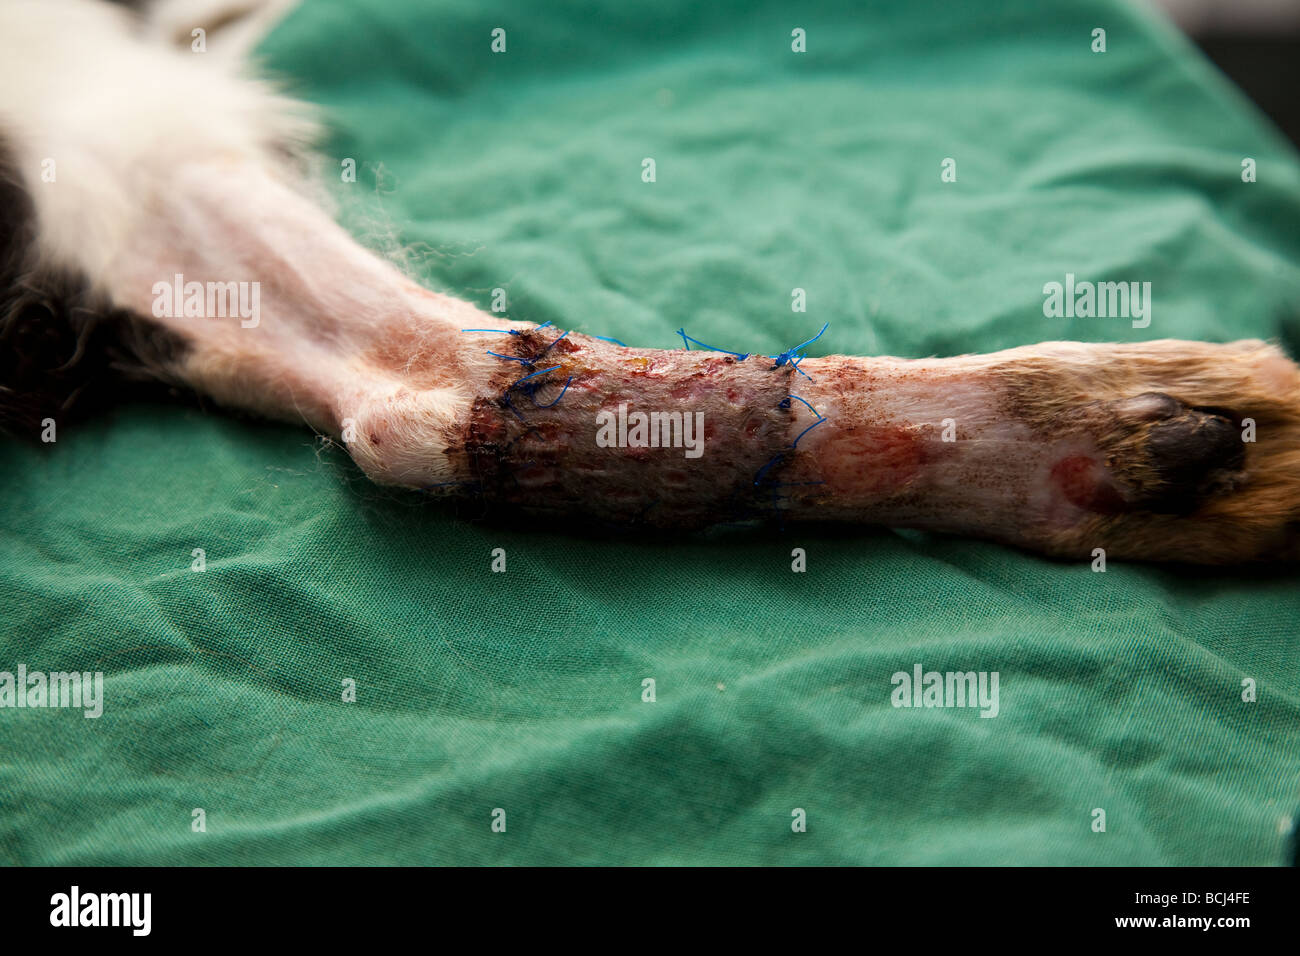 Katze Hauttransplantation Stockfoto